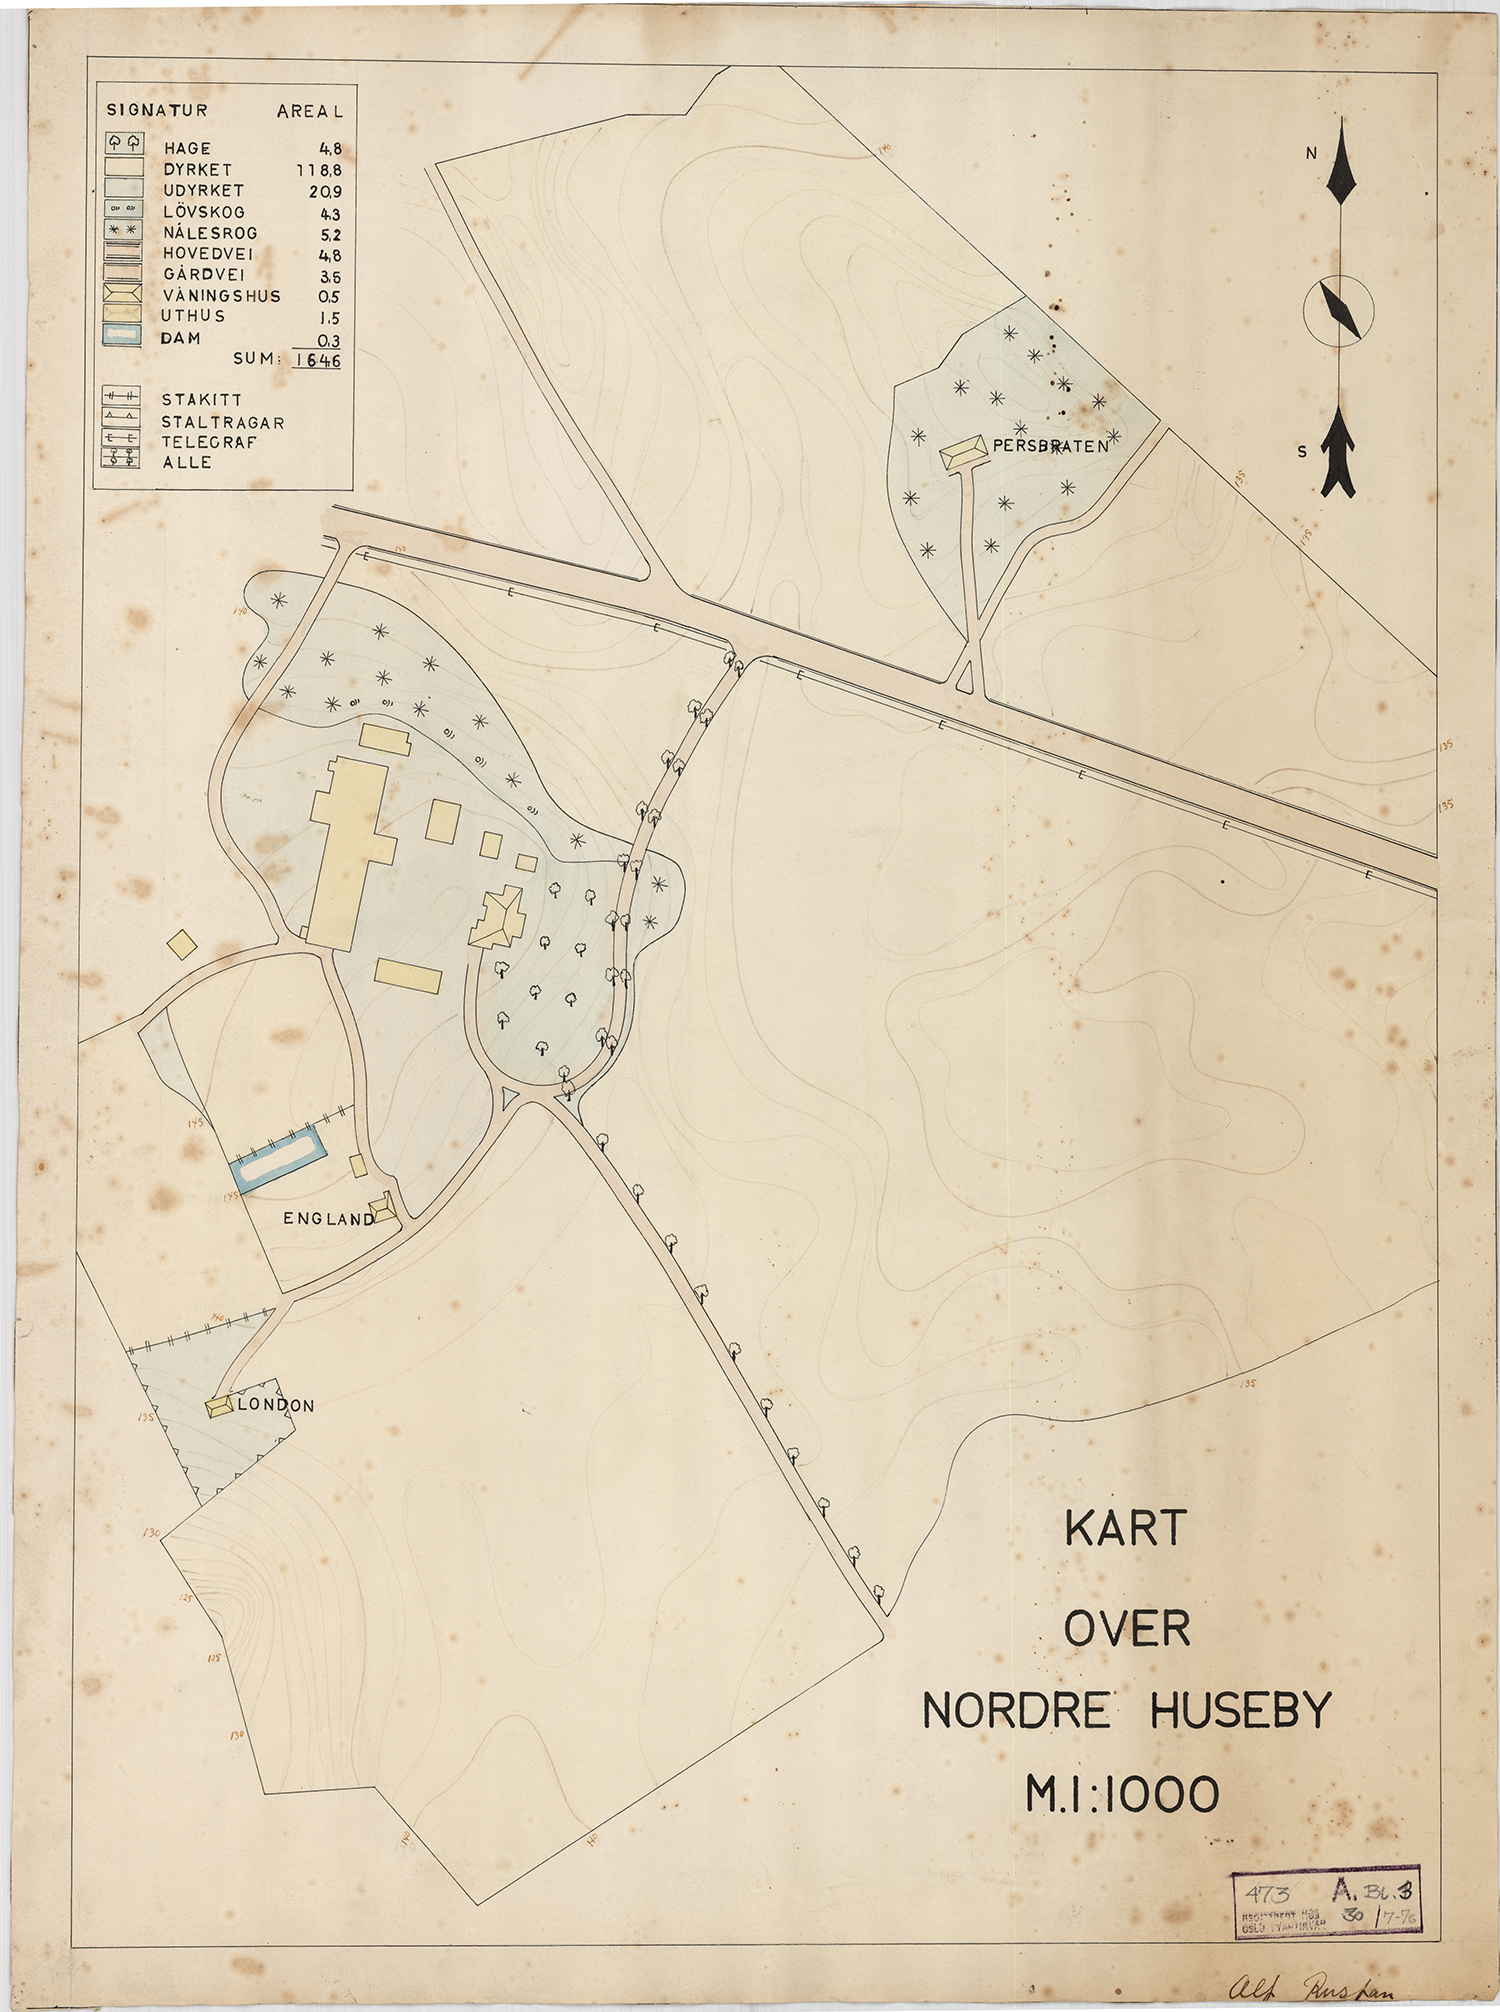 Kart over Nordre Huseby